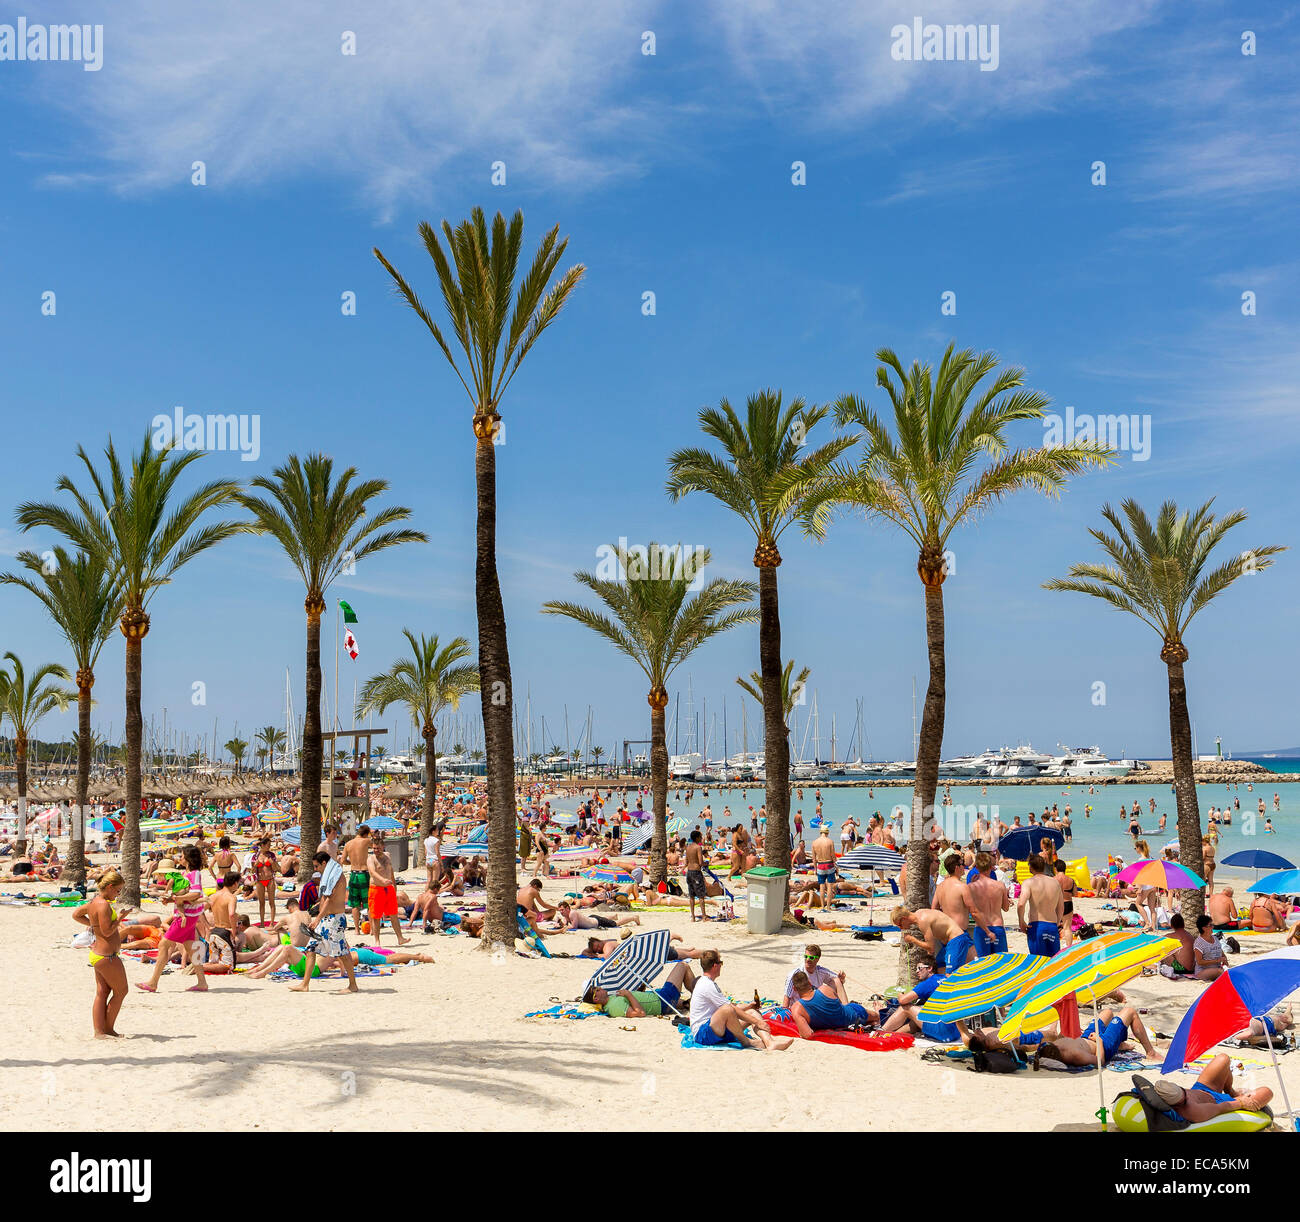 Piena spiaggia, Playa de Palma, baia di Palma di Maiorca, isole Baleari, Spagna Foto Stock